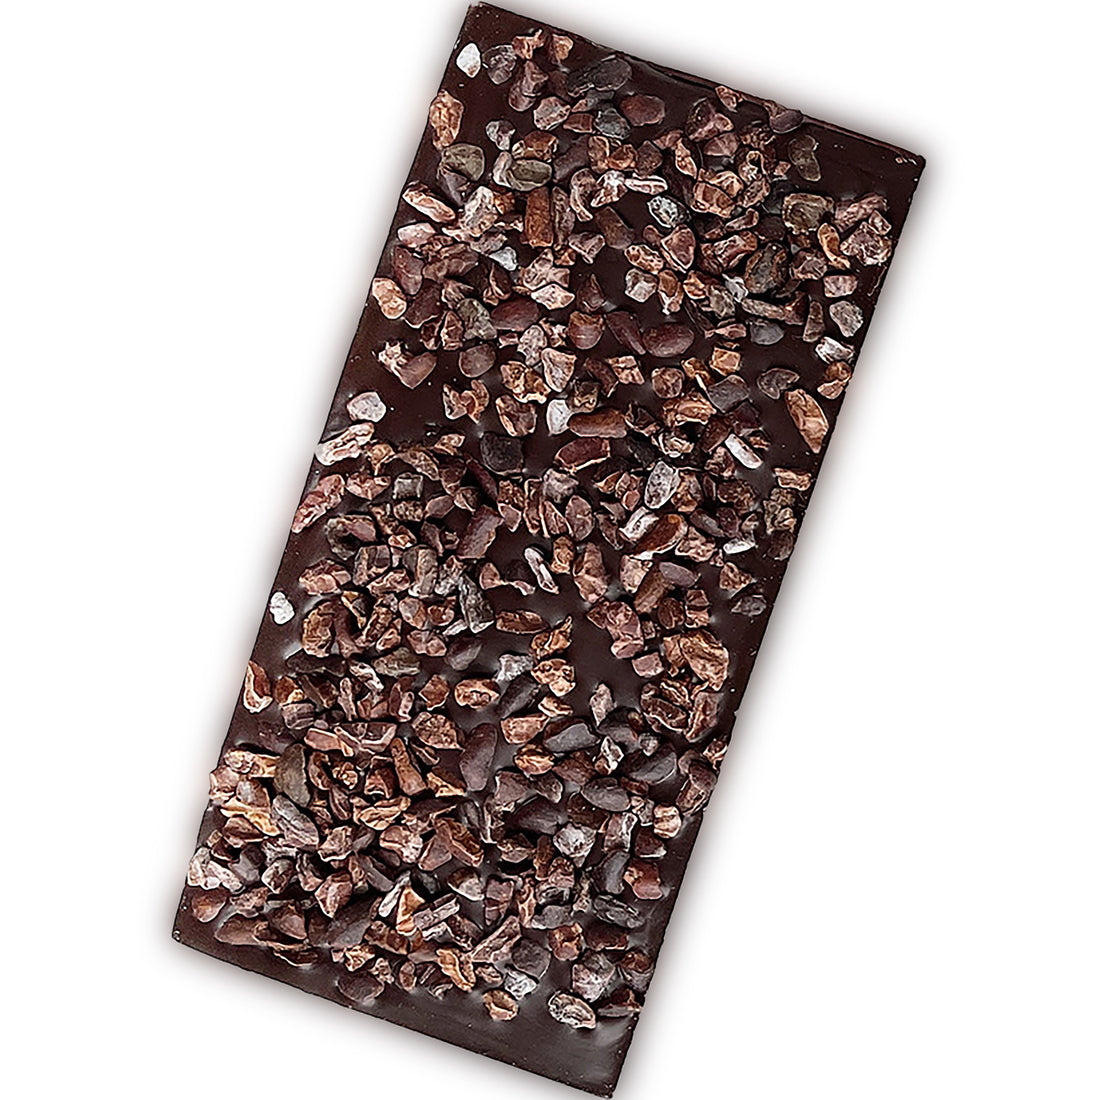 LEDGES Cocoa Nibs Chocolate Bar